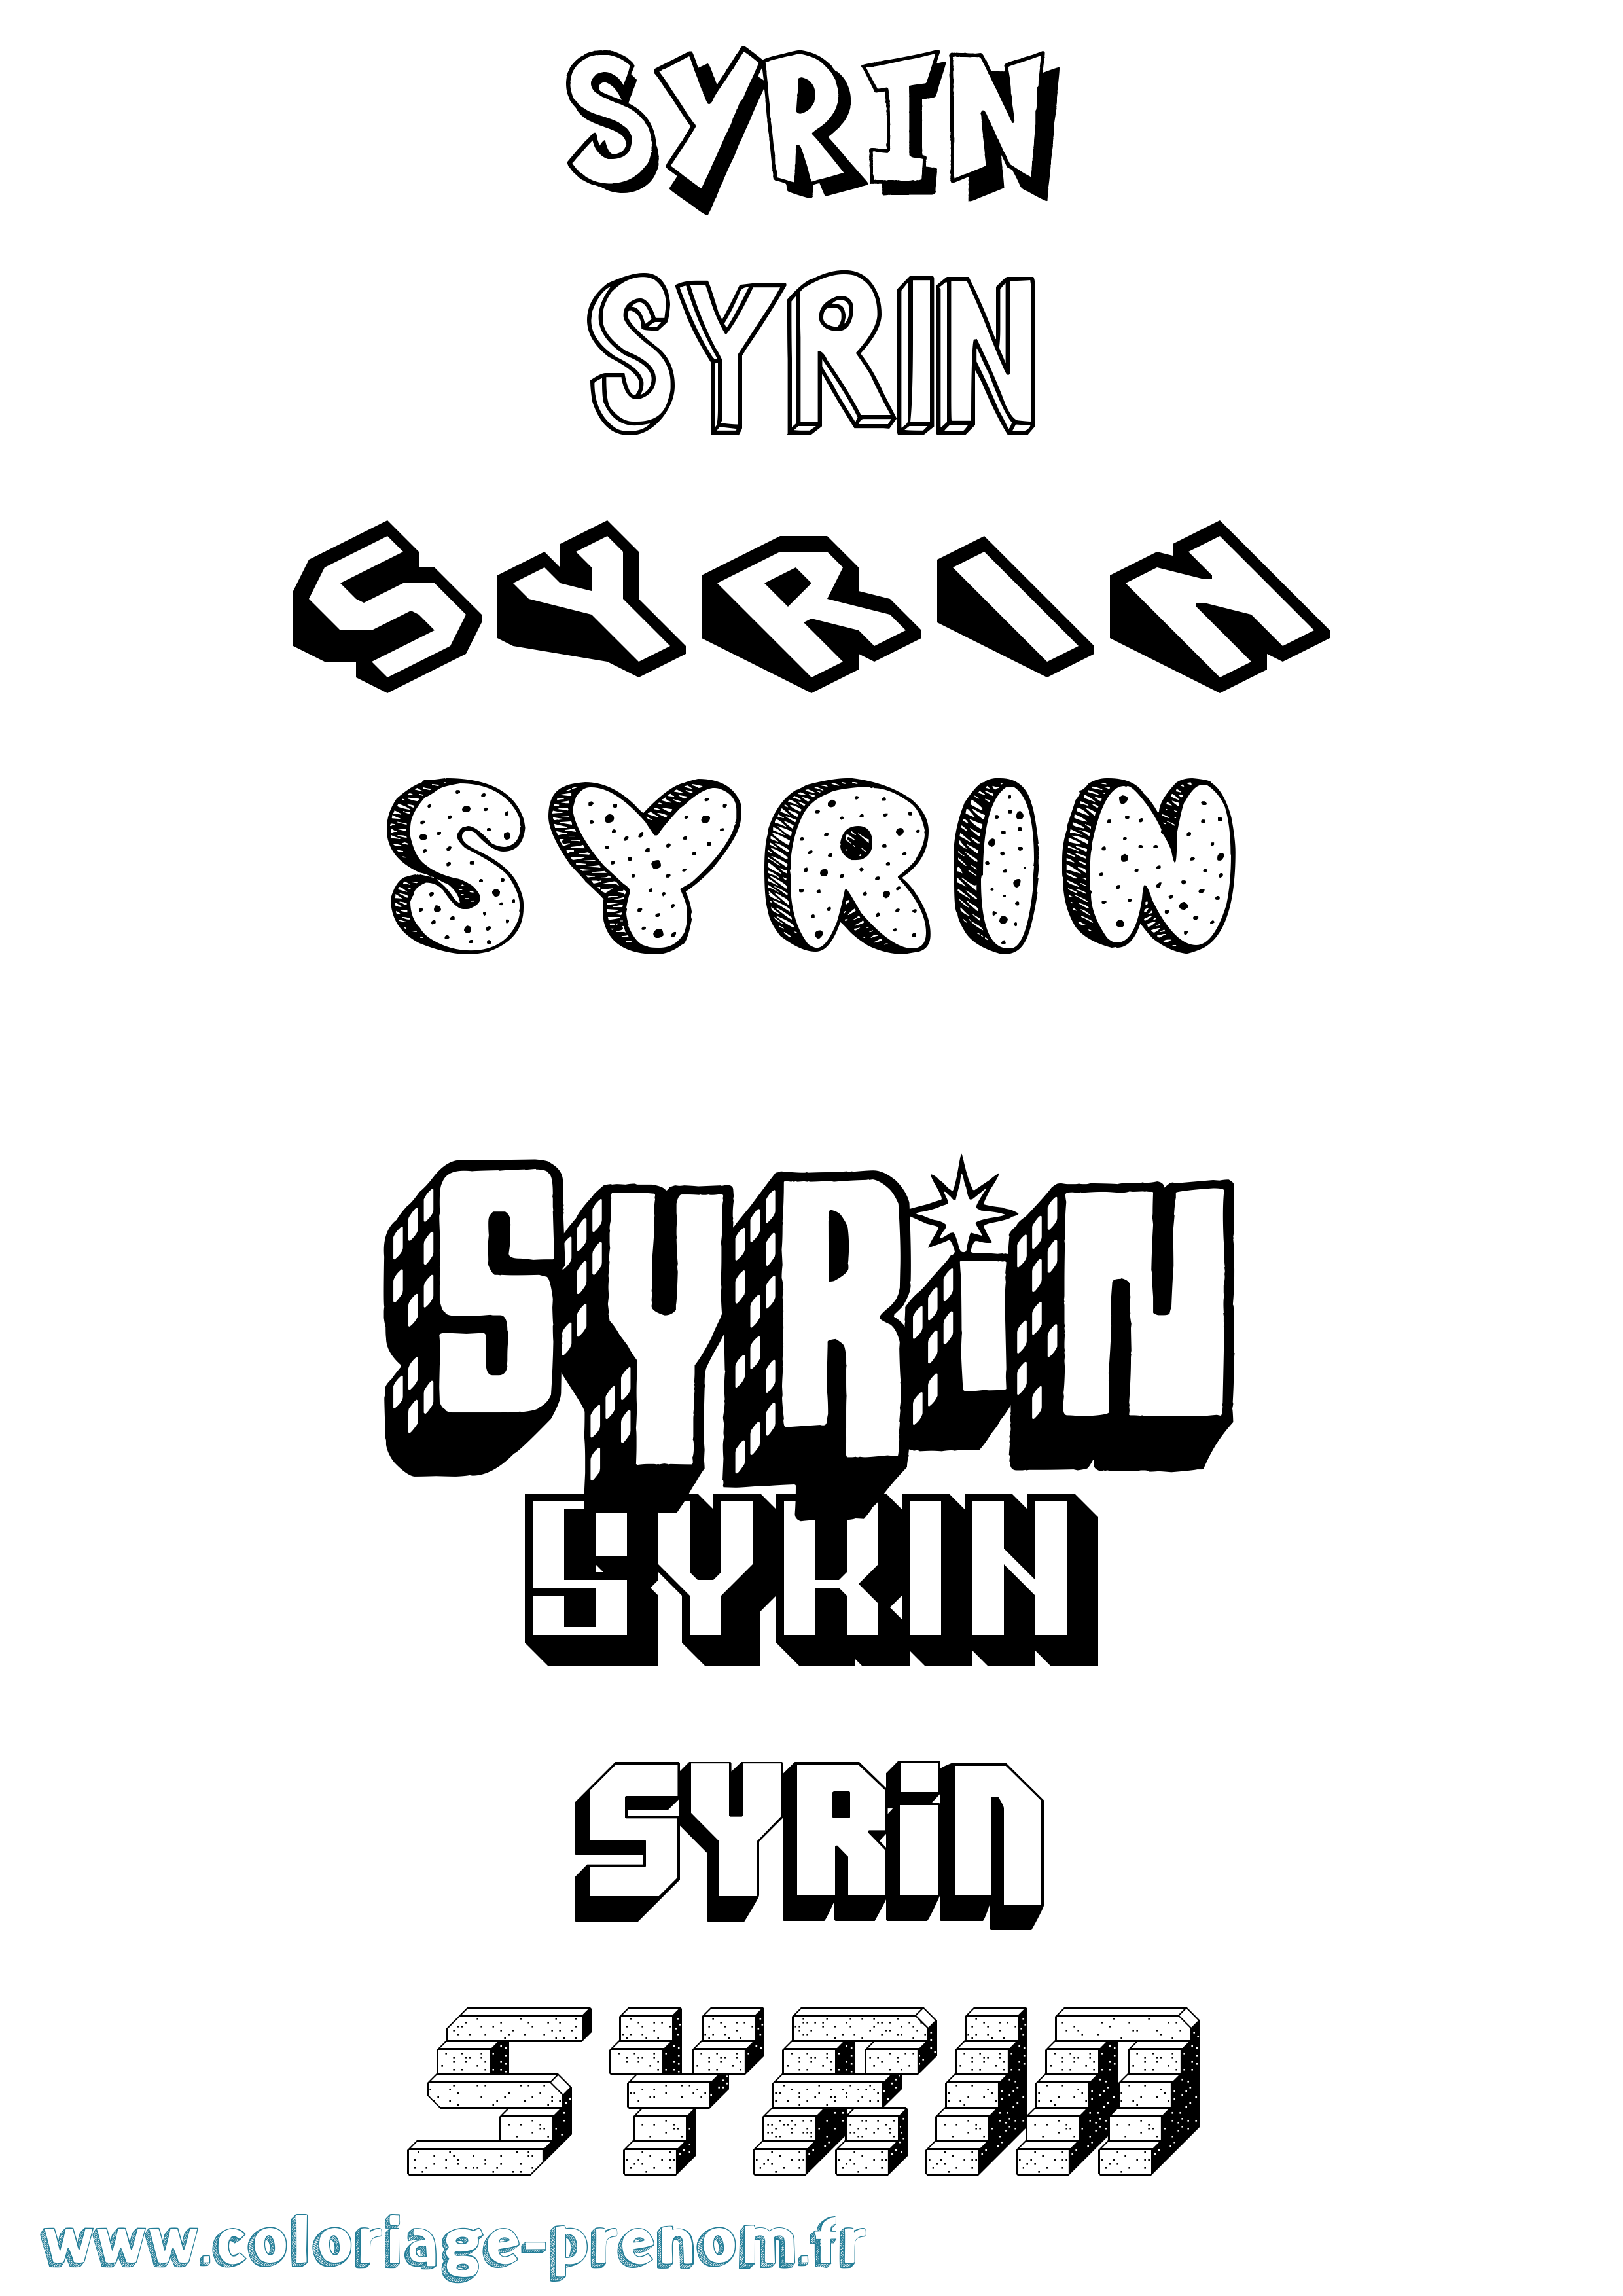 Coloriage prénom Syrin Effet 3D